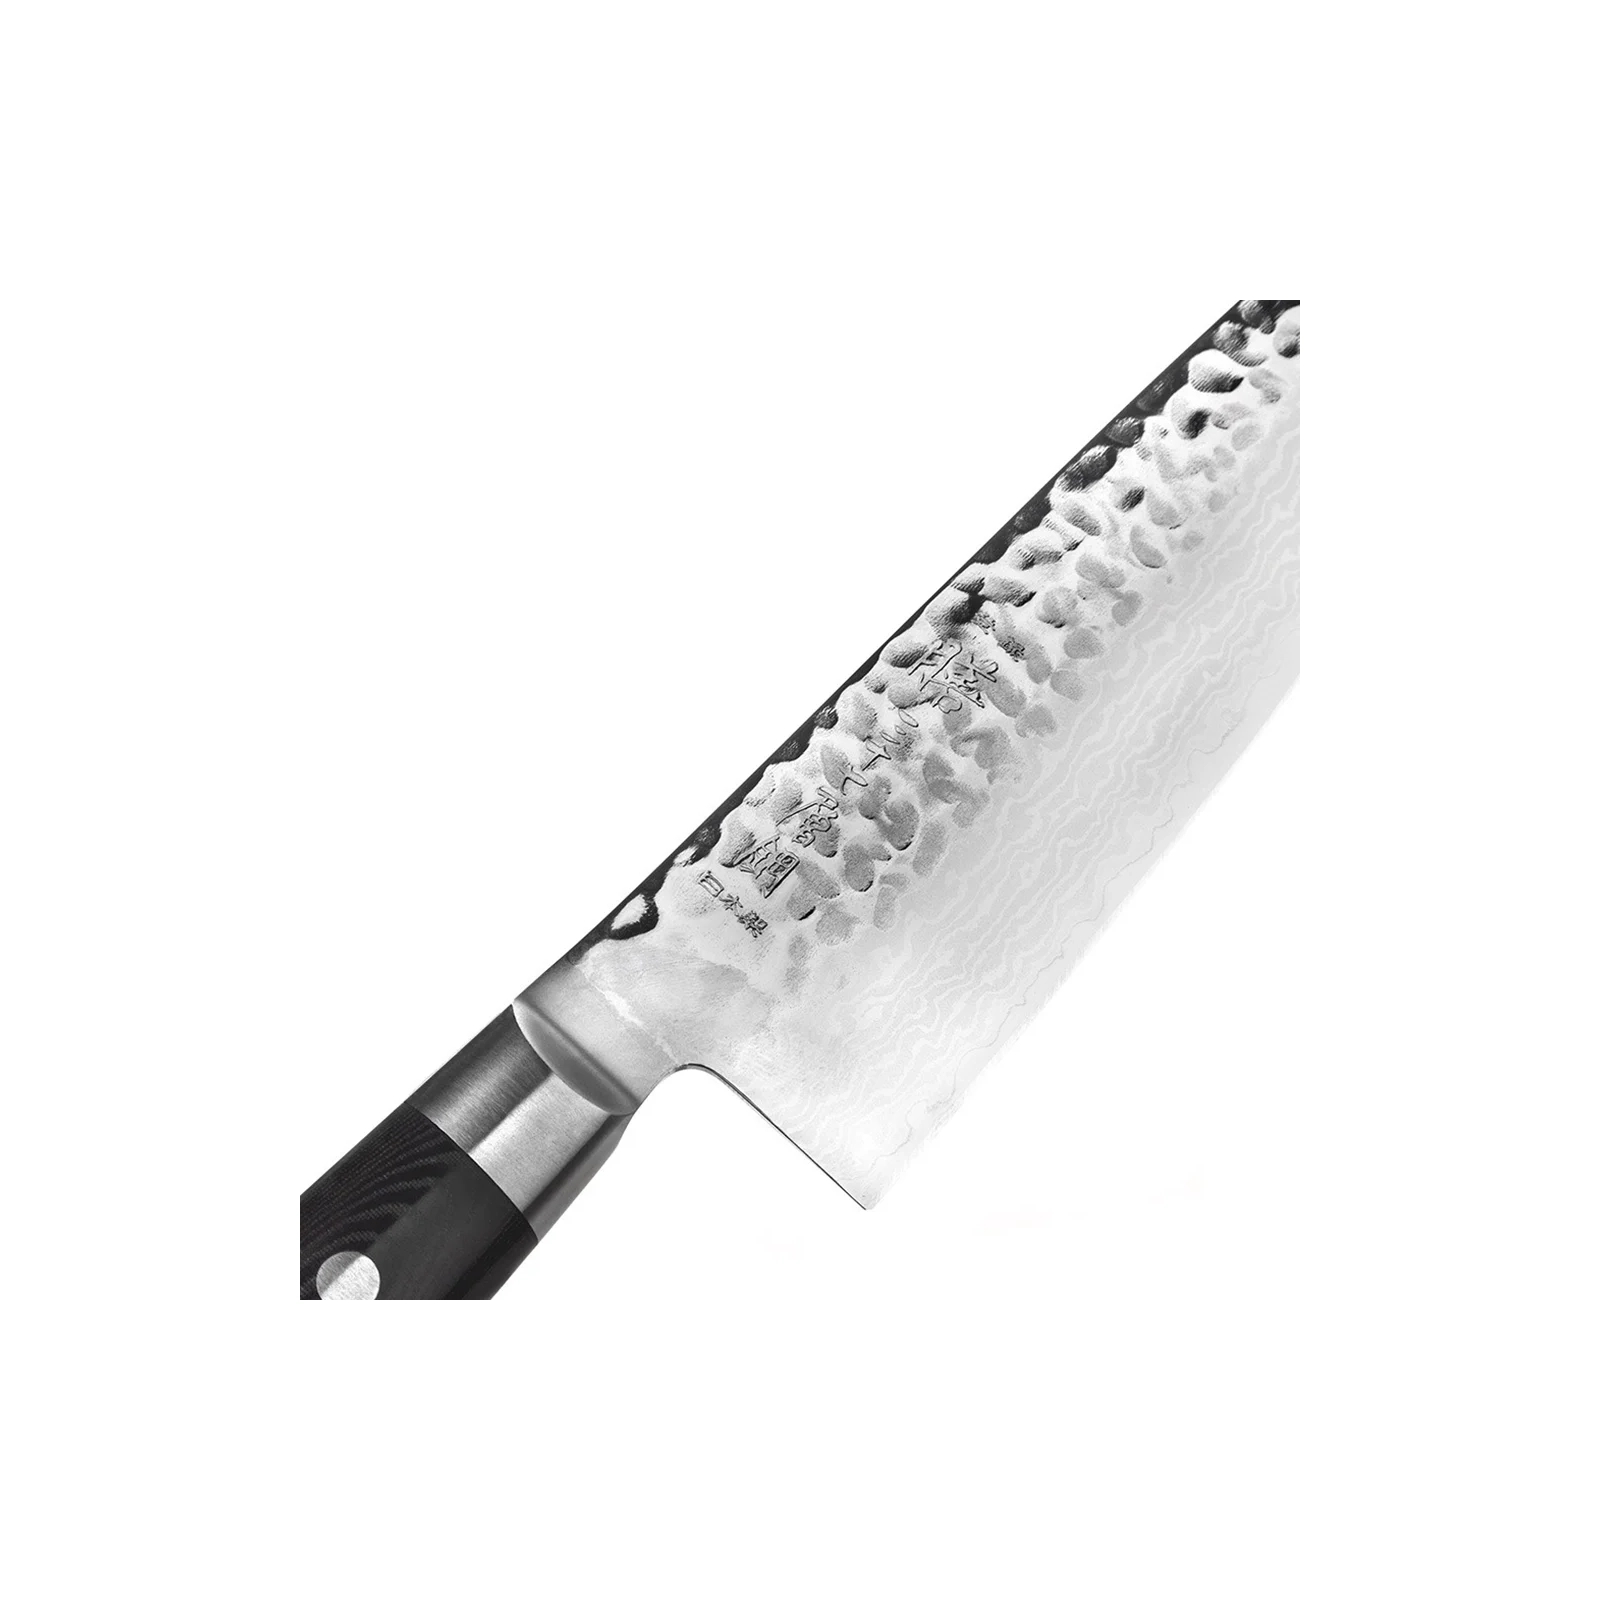 Кухонный нож Yaxell кухарський шеф 200 мм серія Zen (35500) изображение 3